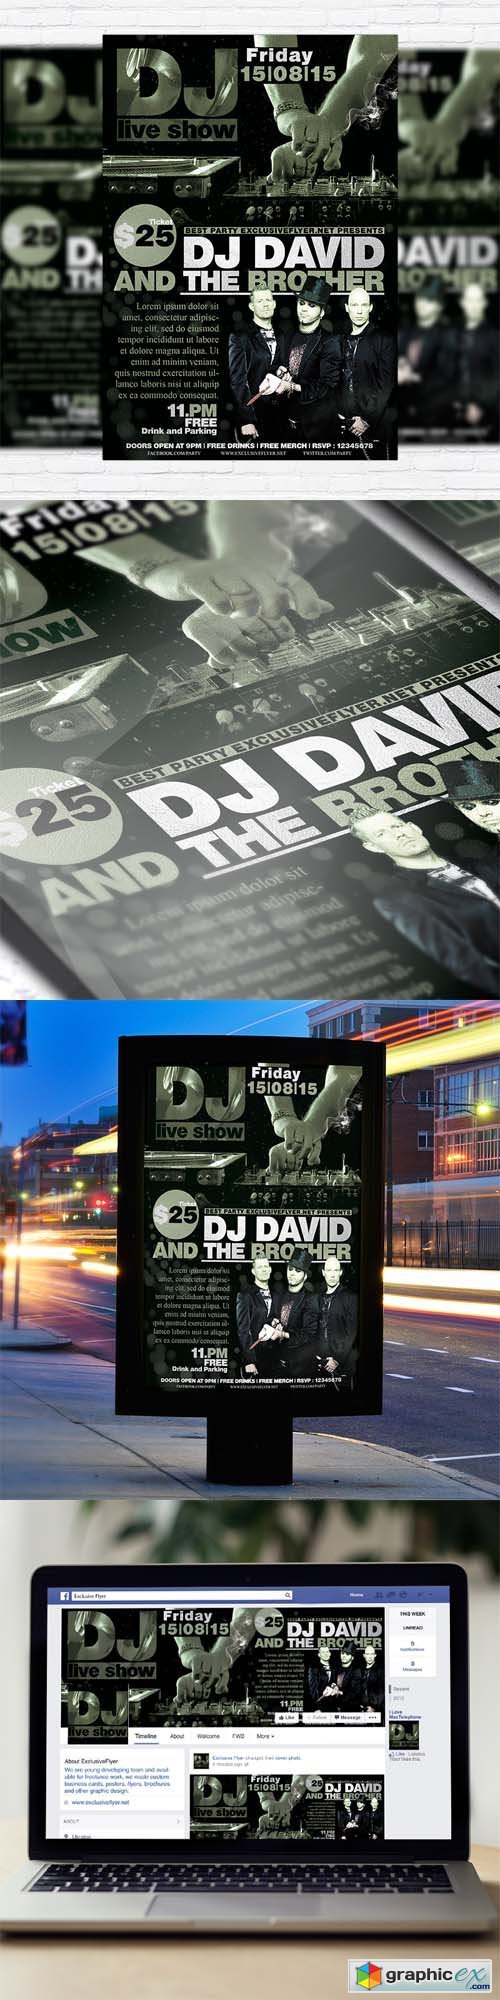 DJ Live Show Vol.2 - Flyer Template + Facebook Cover